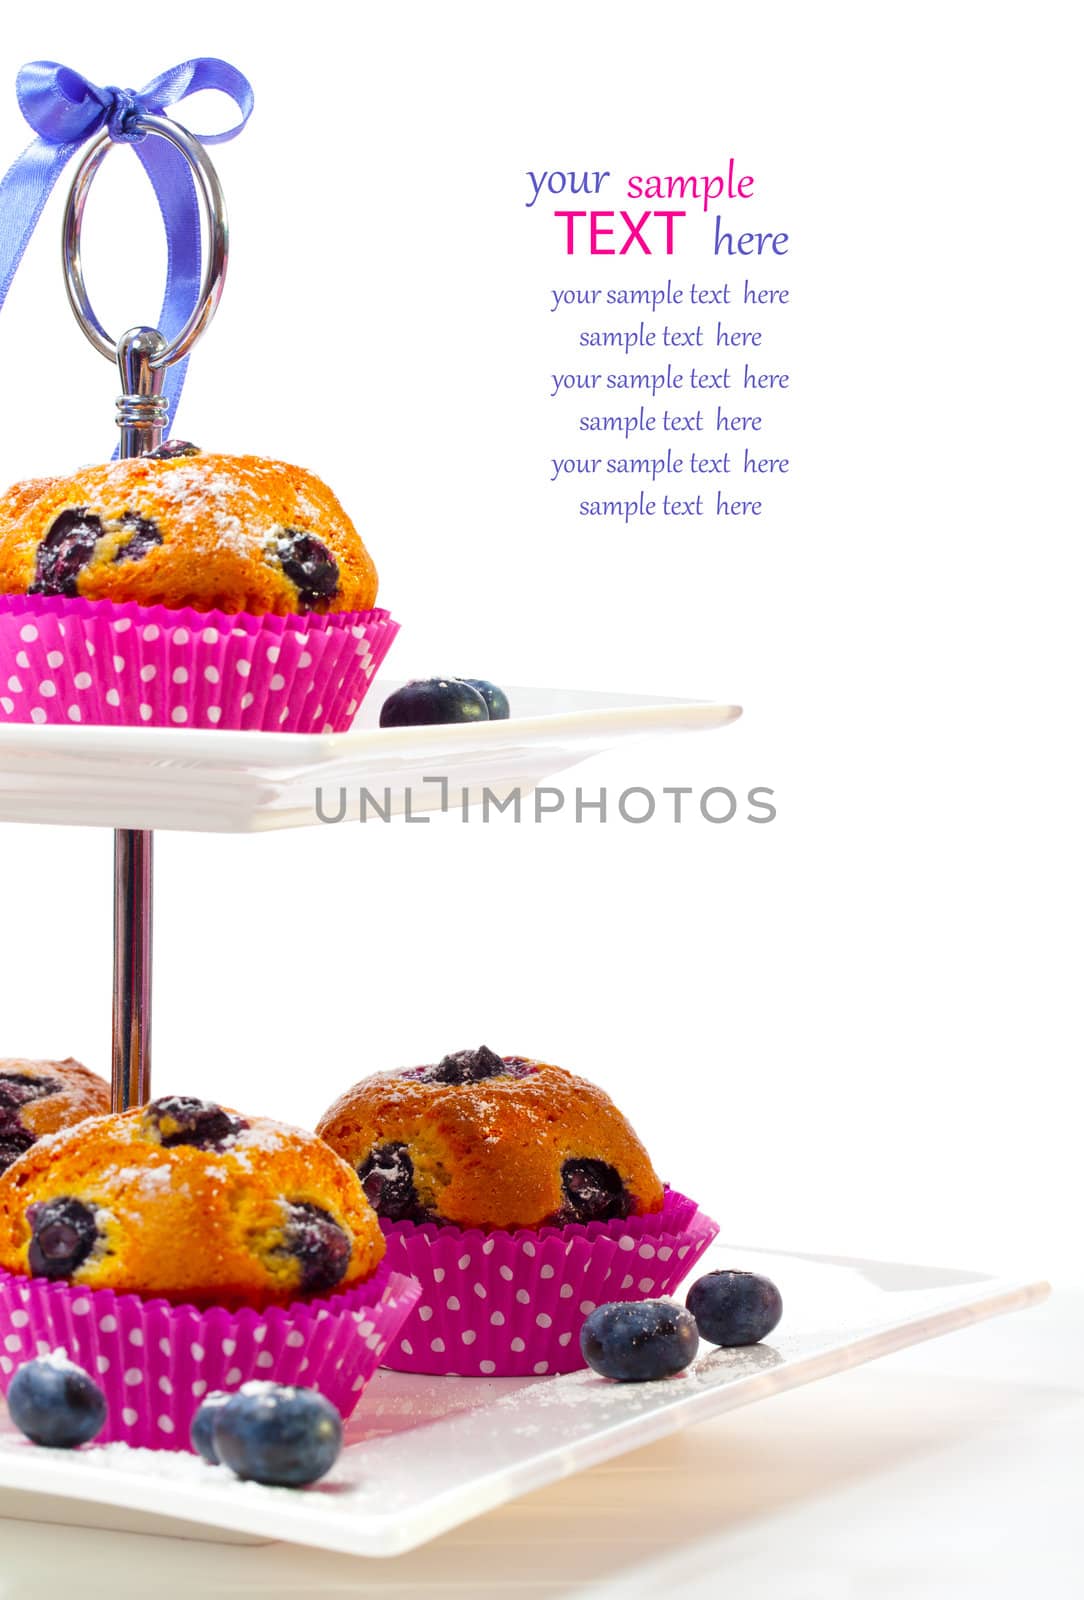 Blueberry muffins on white background by motorolka